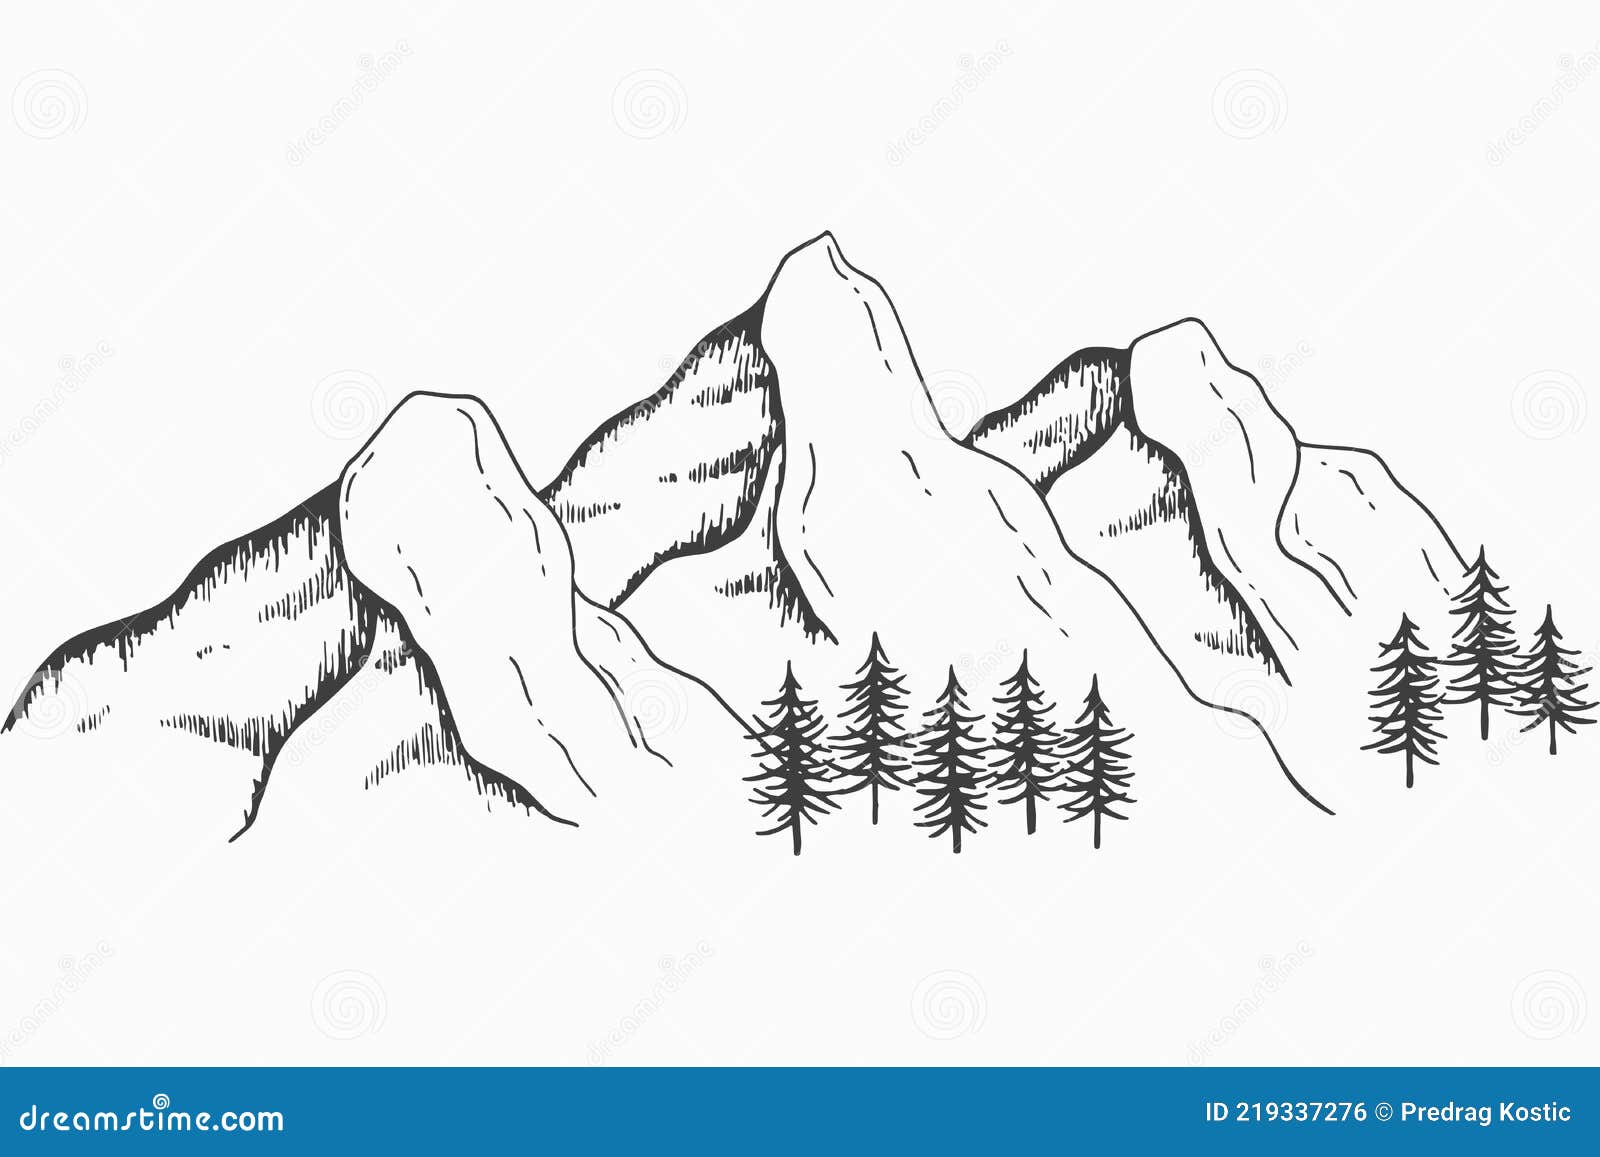 abstract  natute or outdoor mountain range silhouete